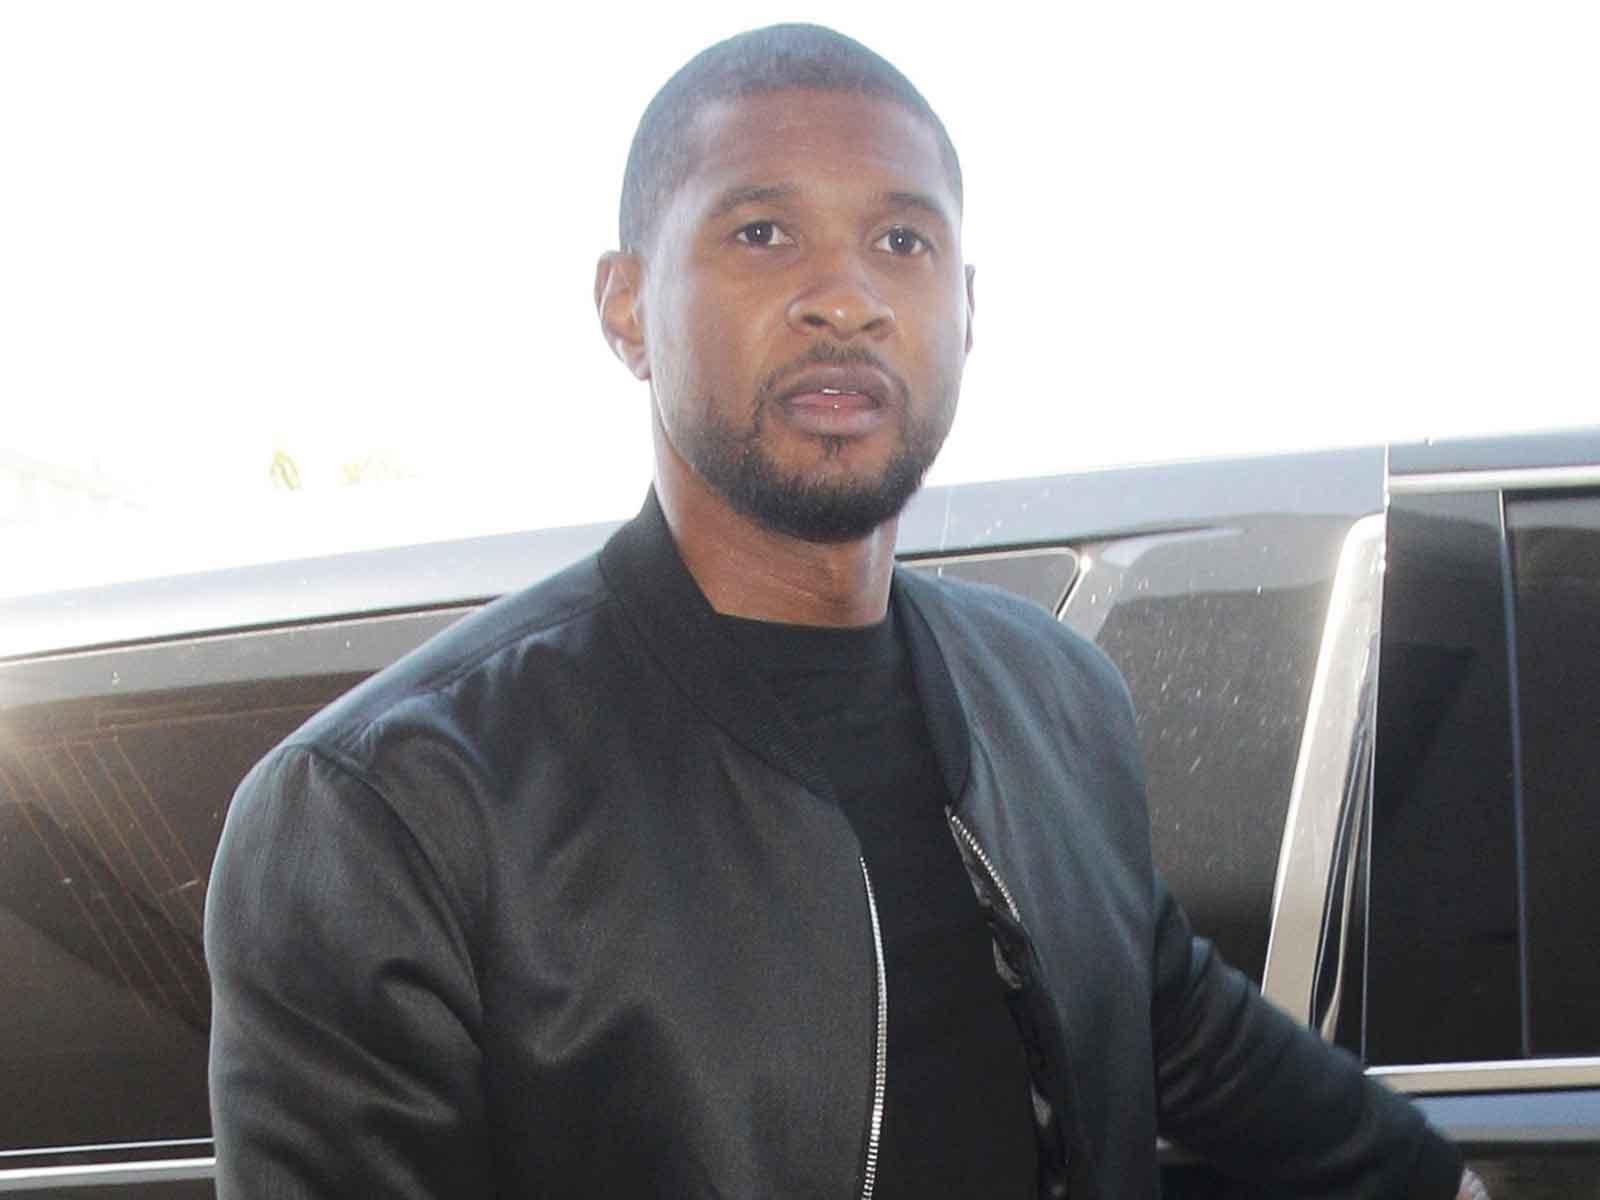 Usher’s Male Herpes Accuser Demands Singer Turn Over Medical Records